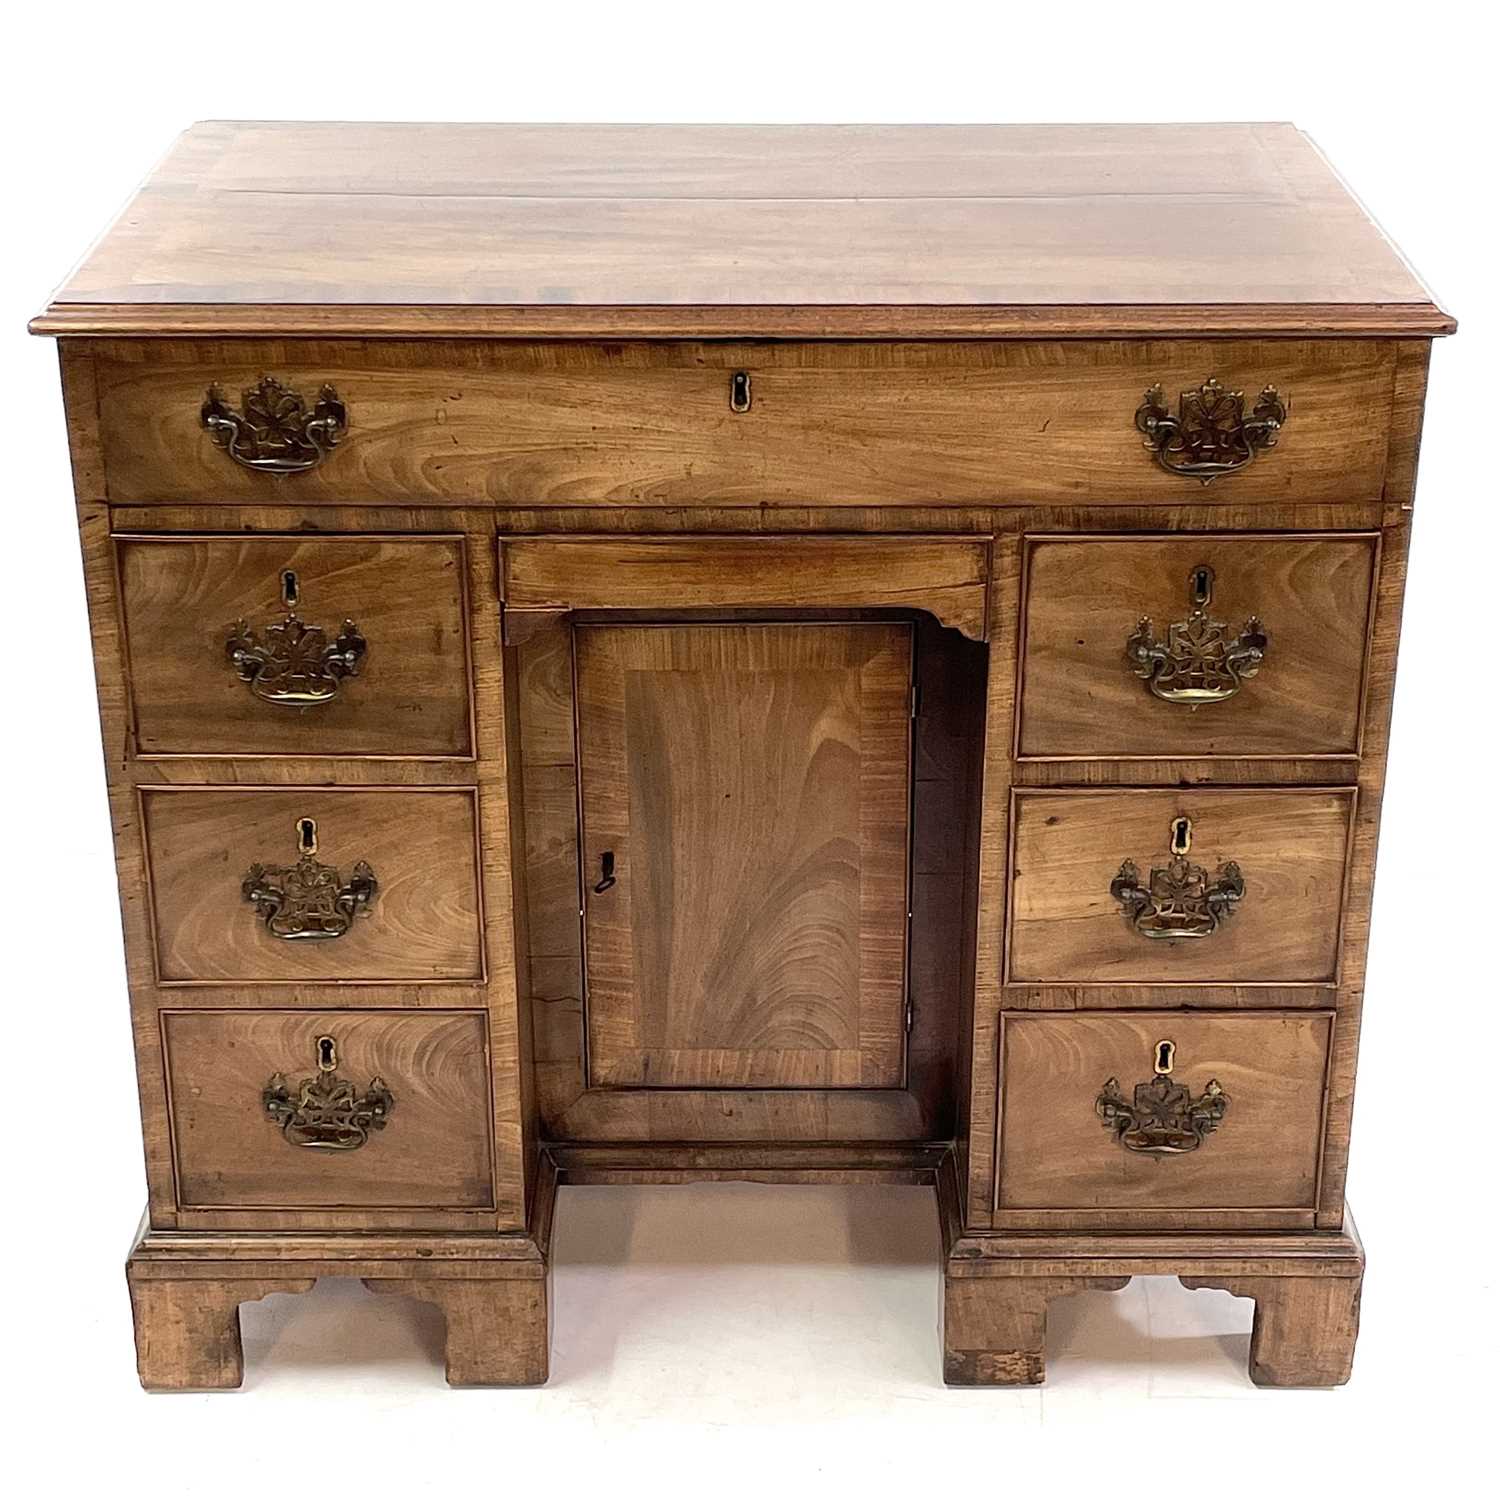 A George III mahogany kneehole gentleman's dressing table/writing desk.